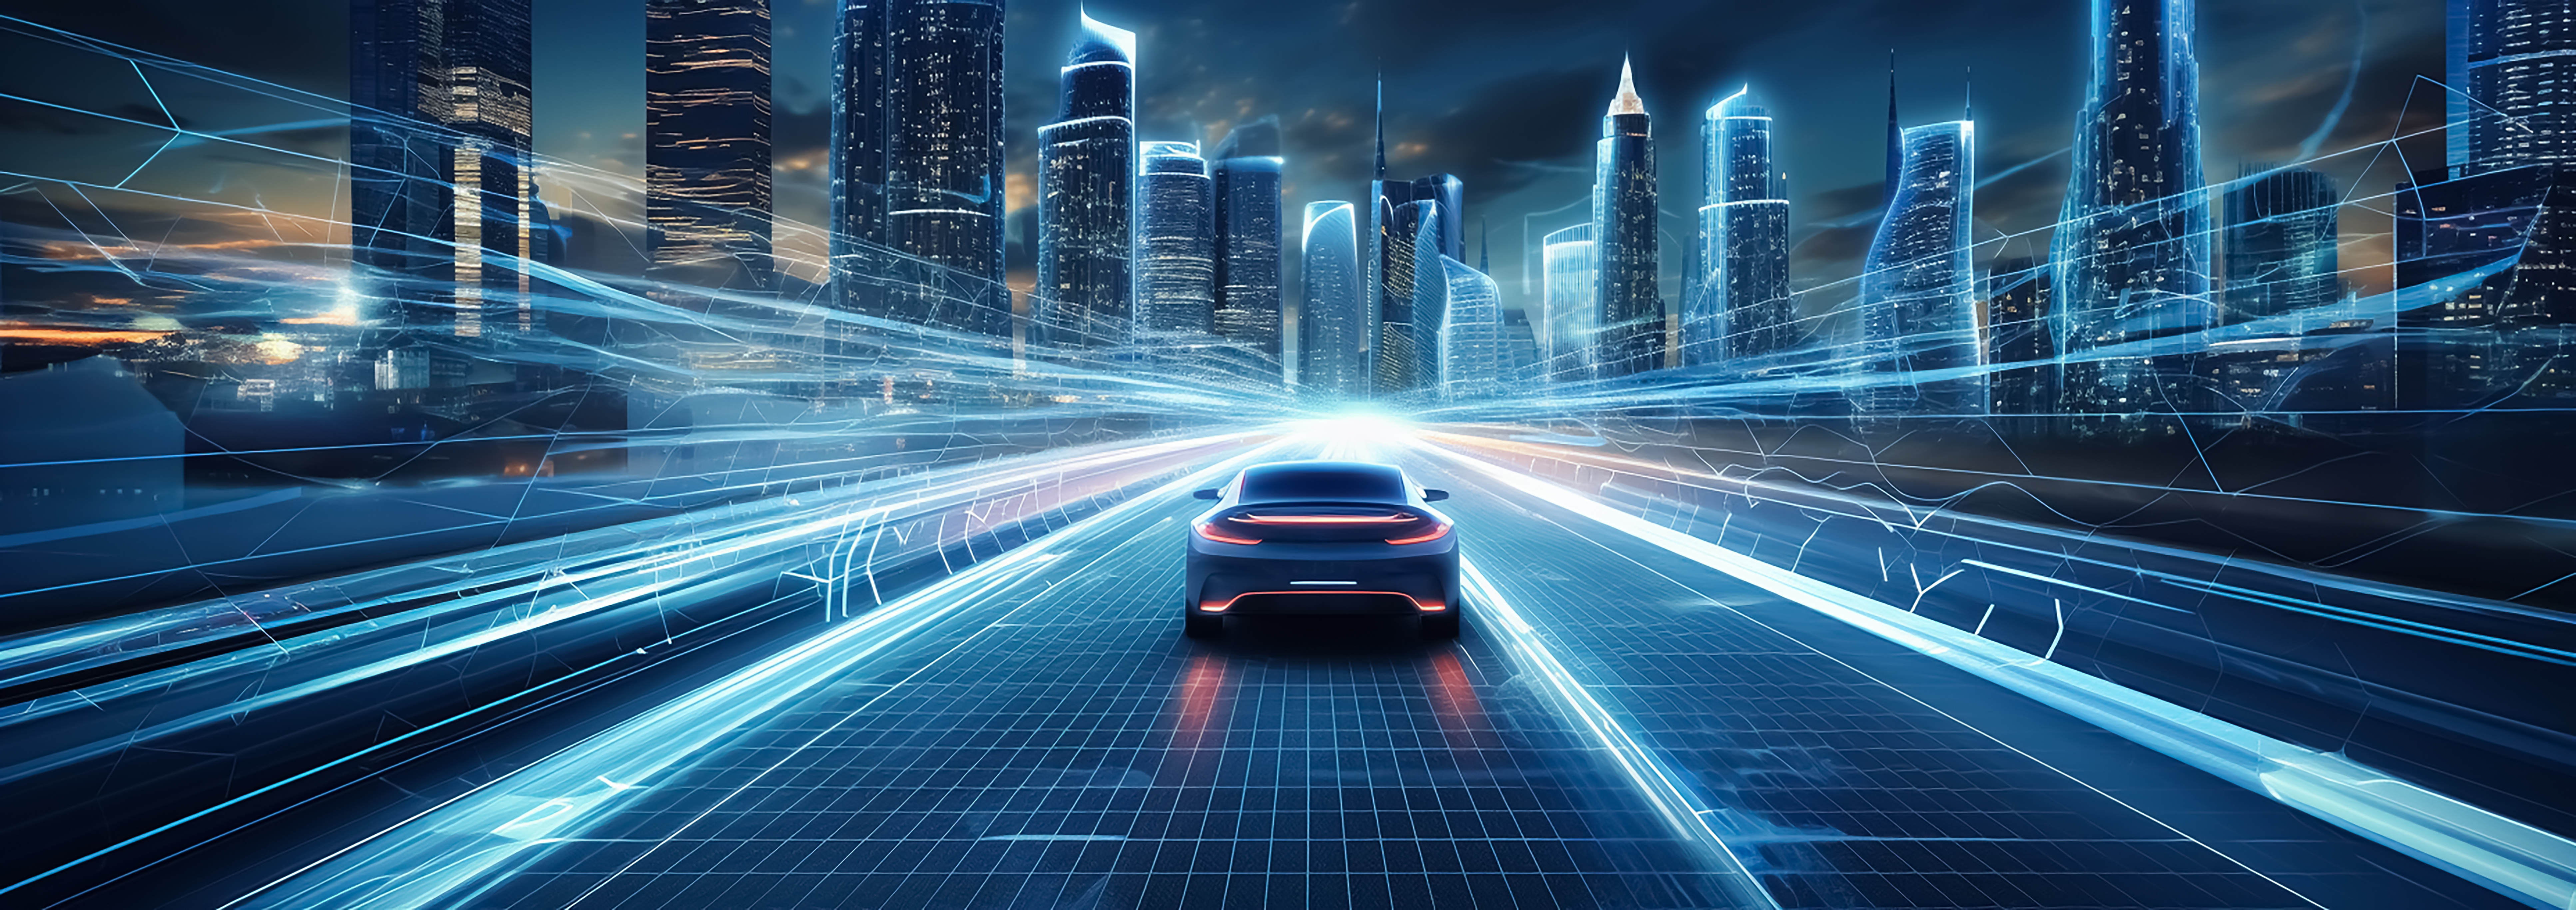 Decorative image, autonomous car with touch sensors in a futuristic setting